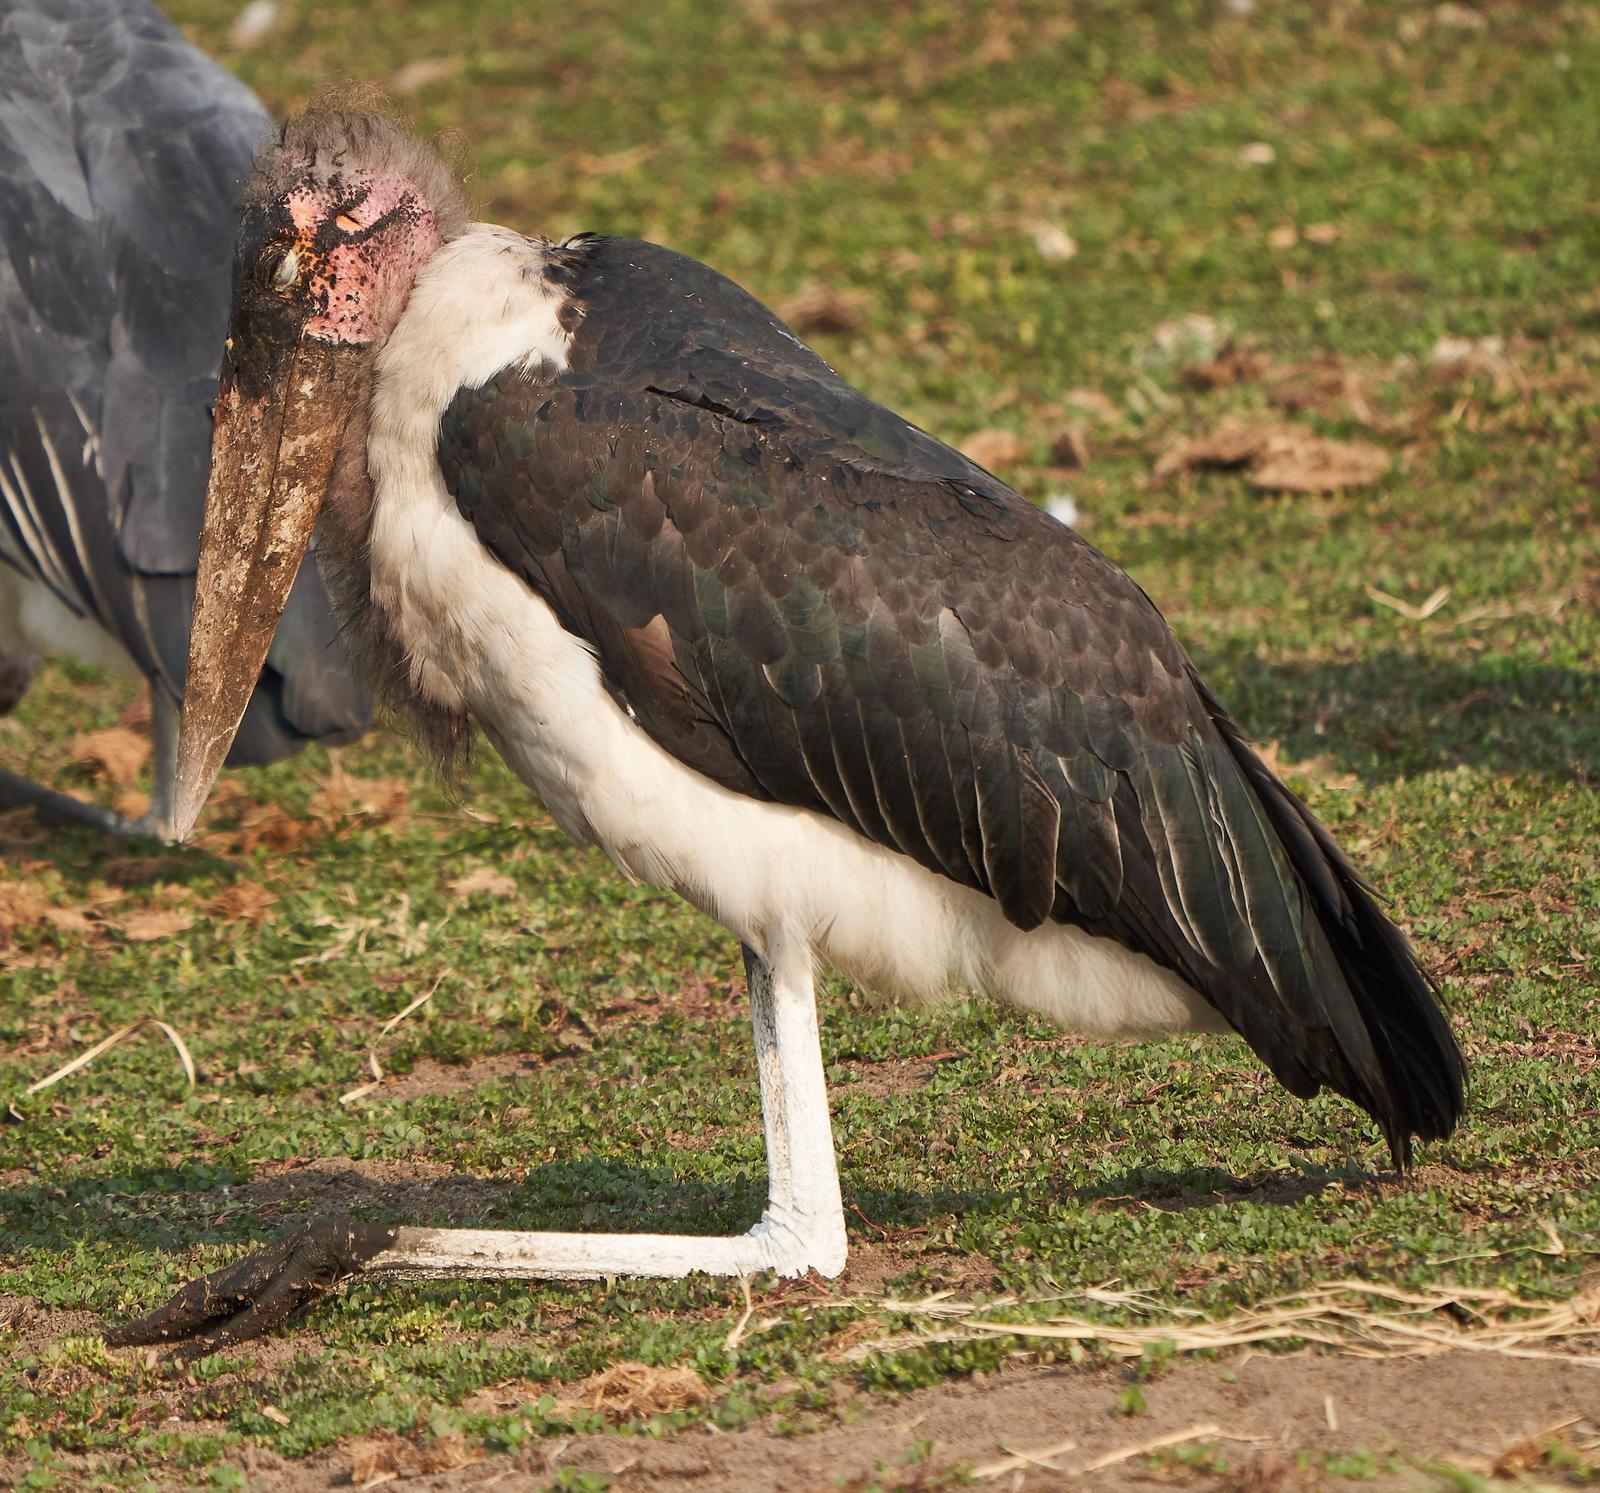 Marabou Stork Photo by Steven Cheong